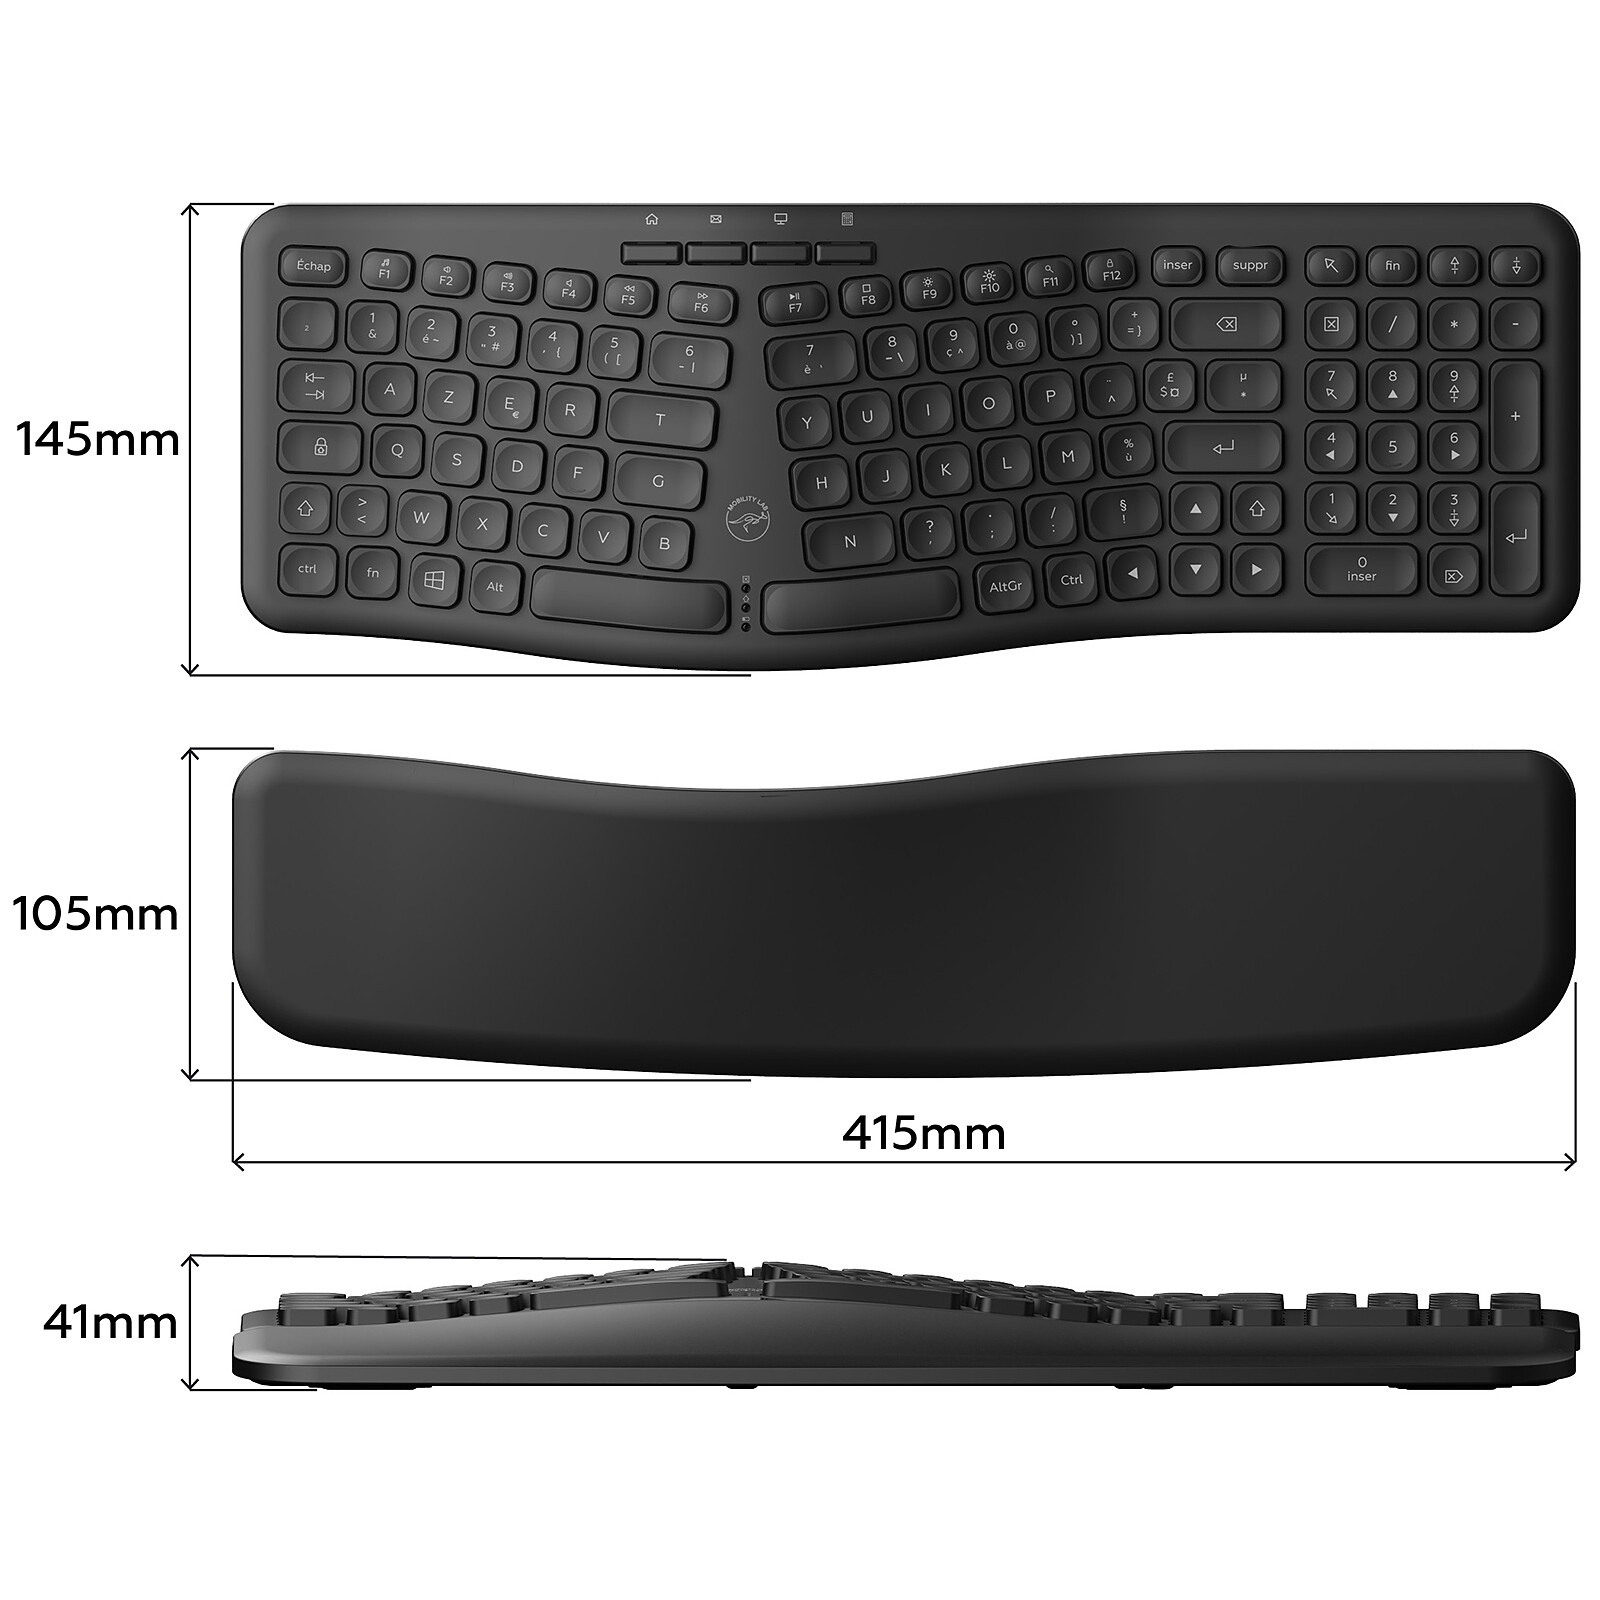 Clavier sans fil ergonomique Microsoft Sculpt Ergonomic Keyboard